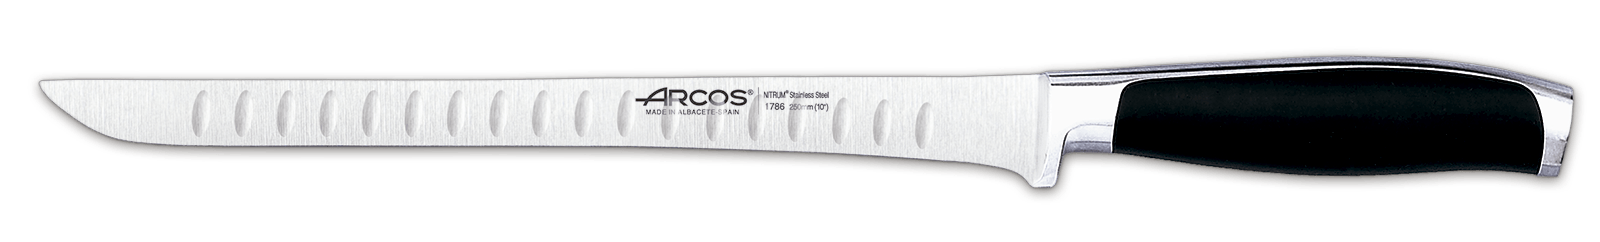 Cuchillo Arcos Jamonero de 250mm [Serie Latina] Ref: 101300